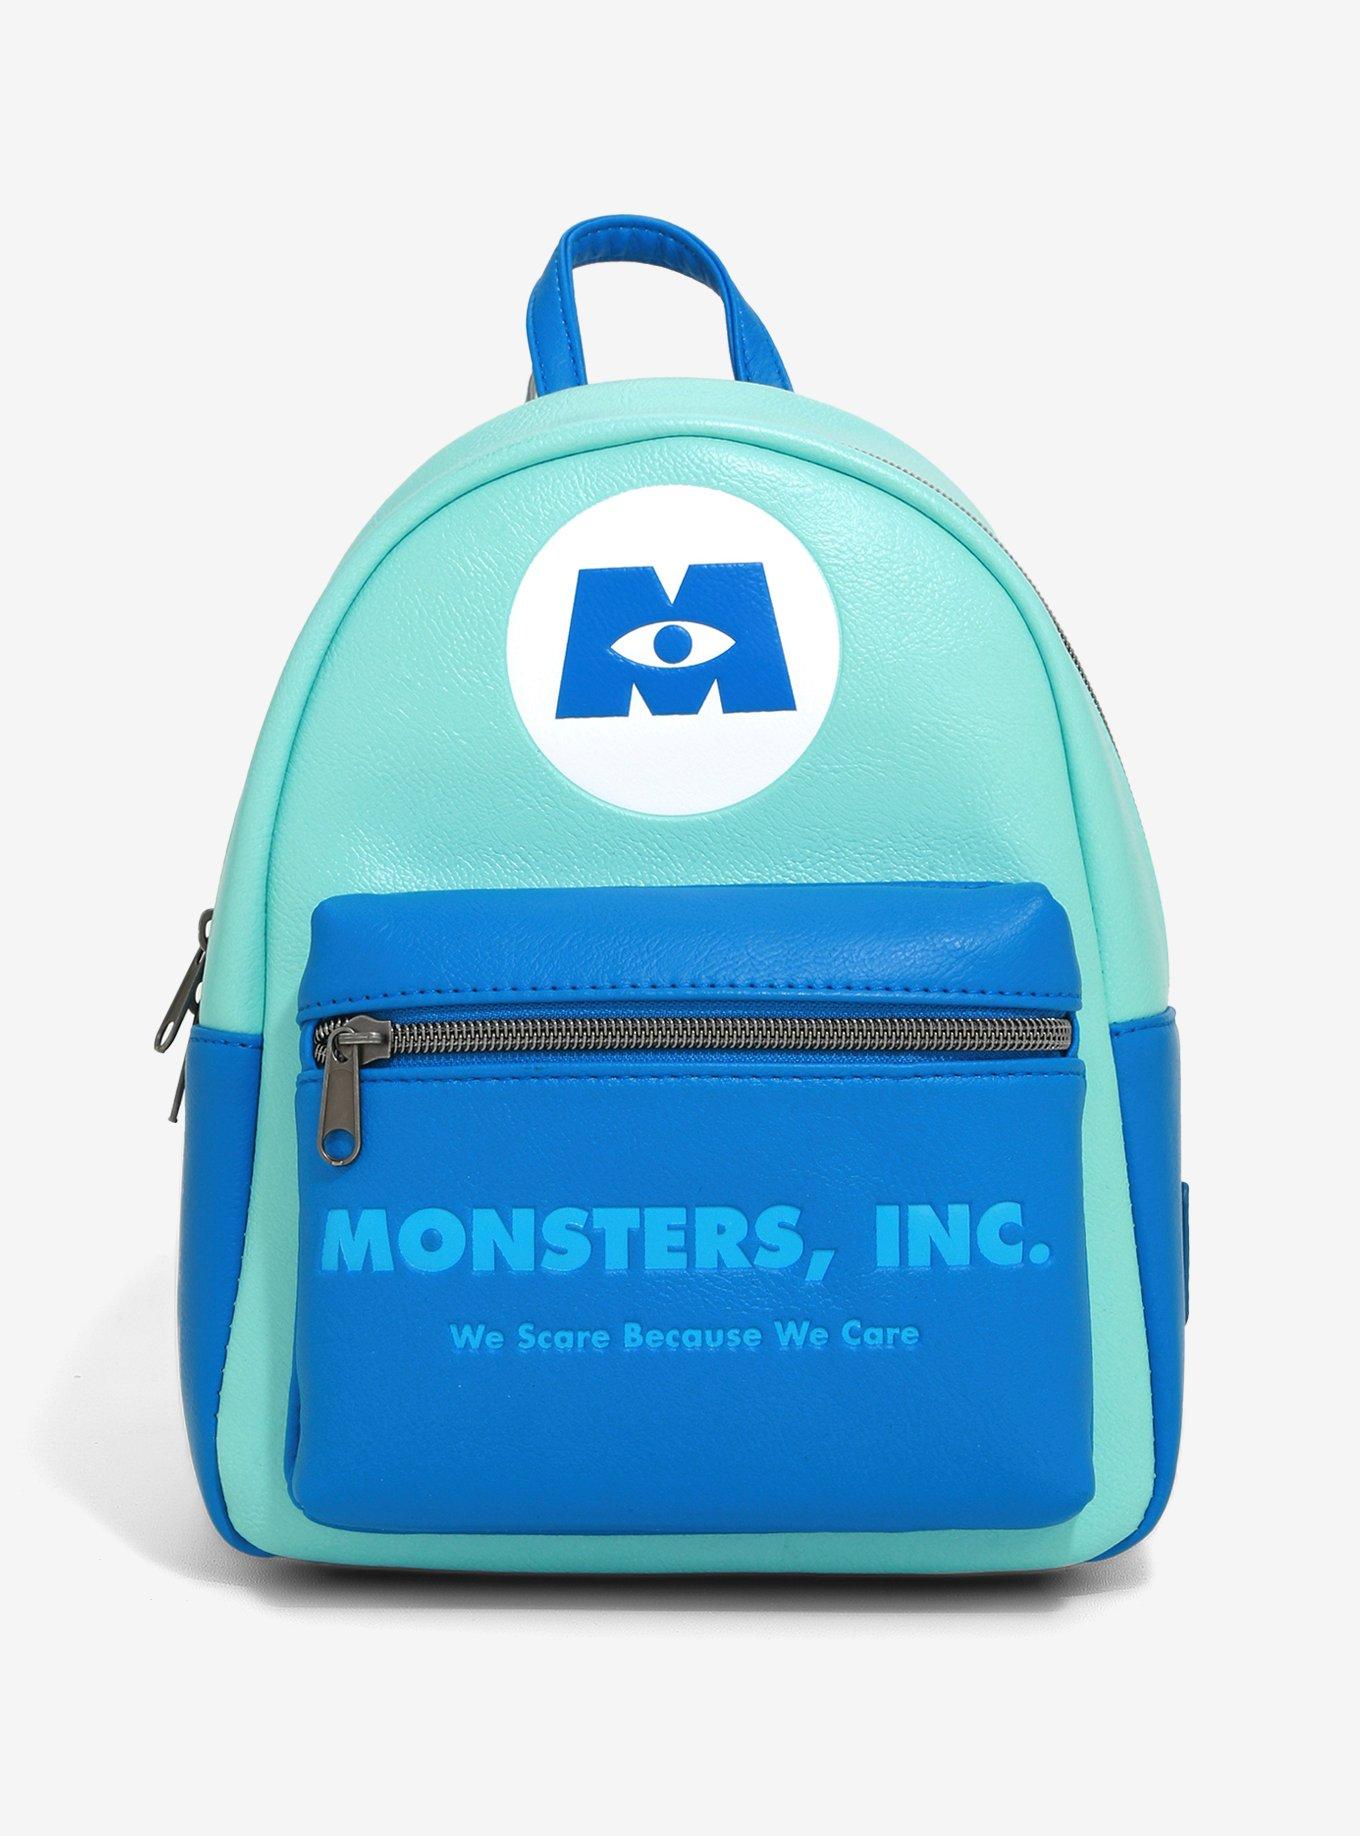 disney store monsters inc backpack